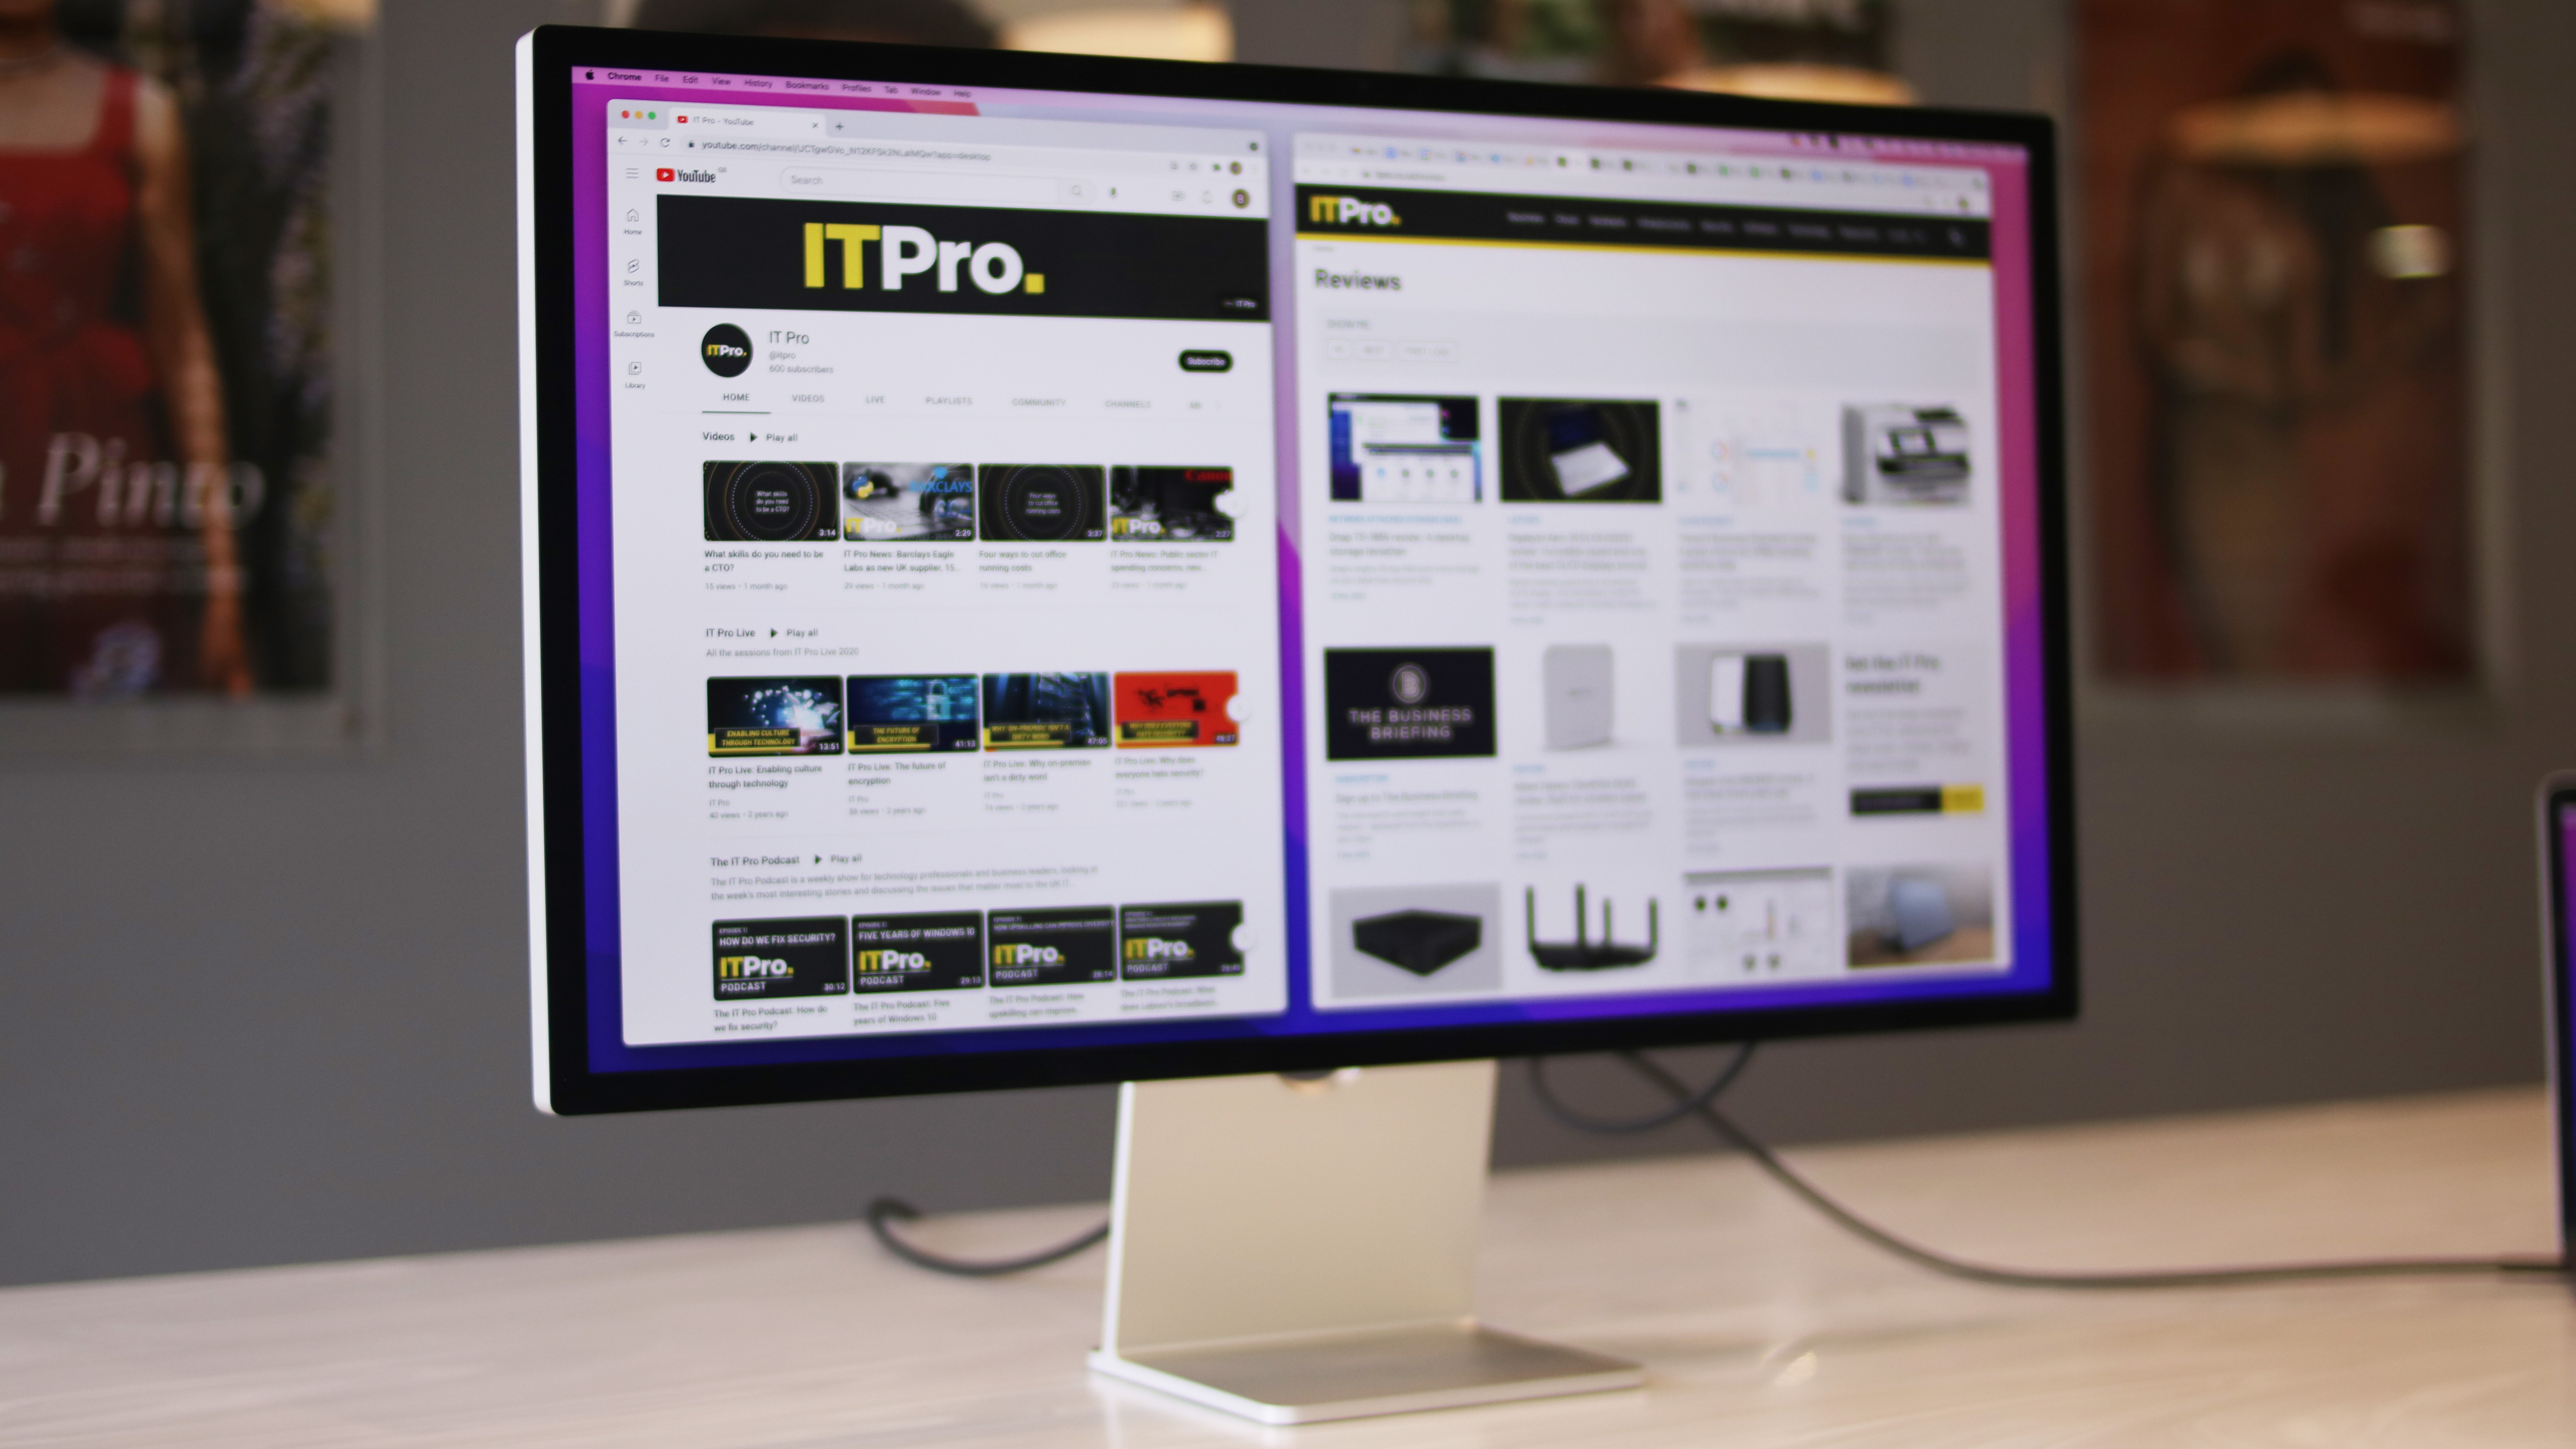 The ITPro website on the Apple Studio display